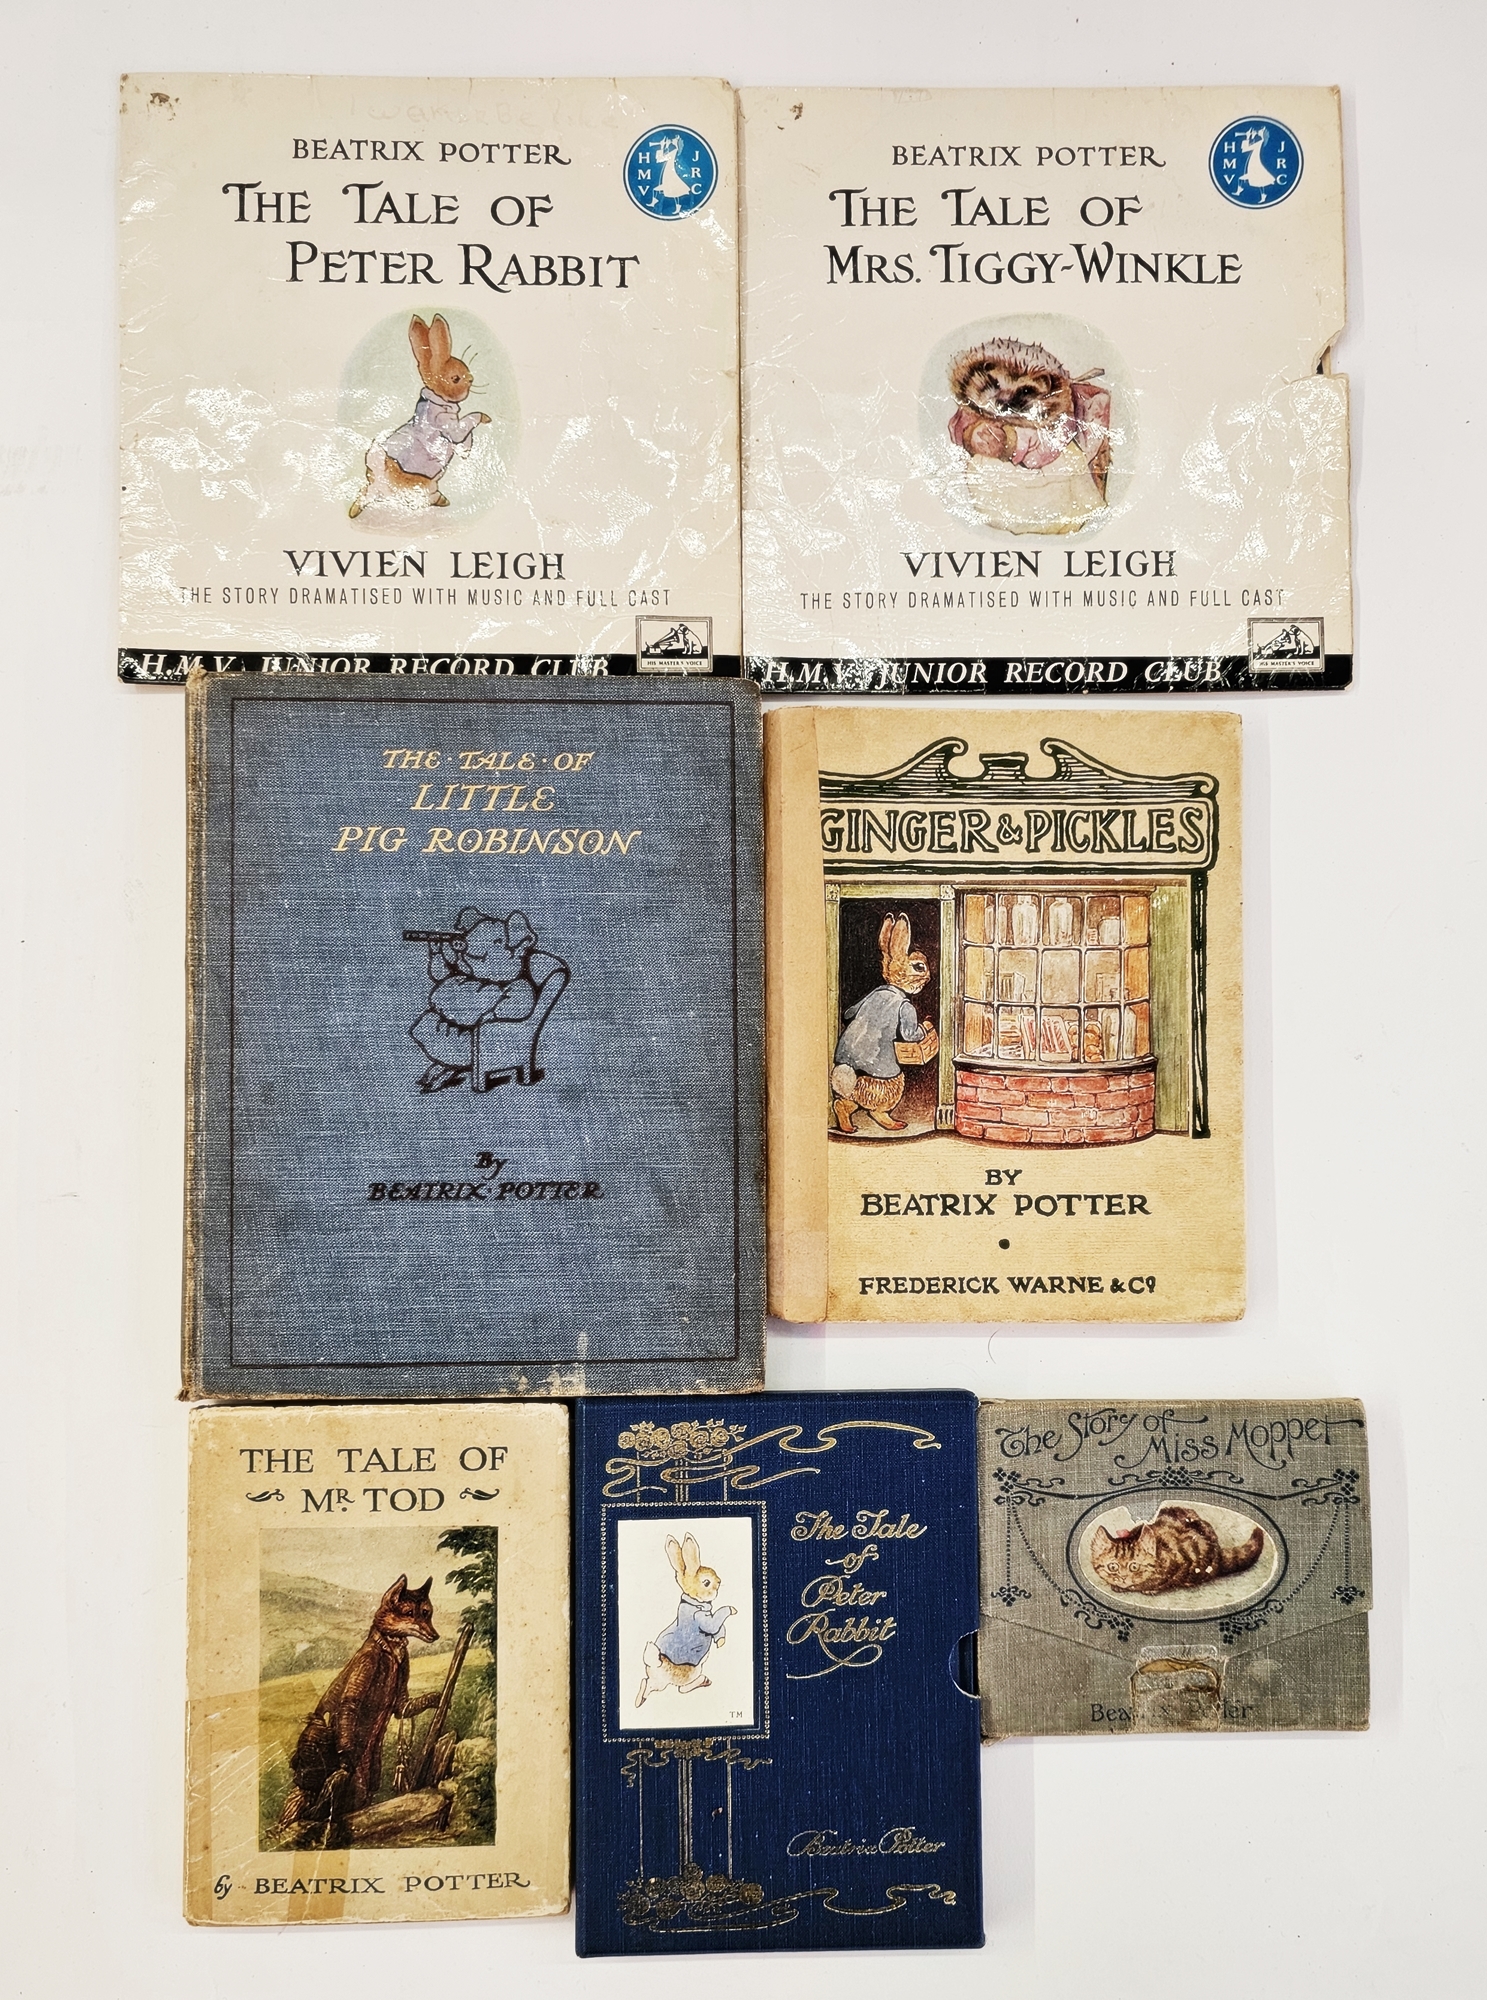 Potter, Beatrix  "The Story of Miss Moppet", Frederick Warne & Co, 1906, Frederick Warne & Co London